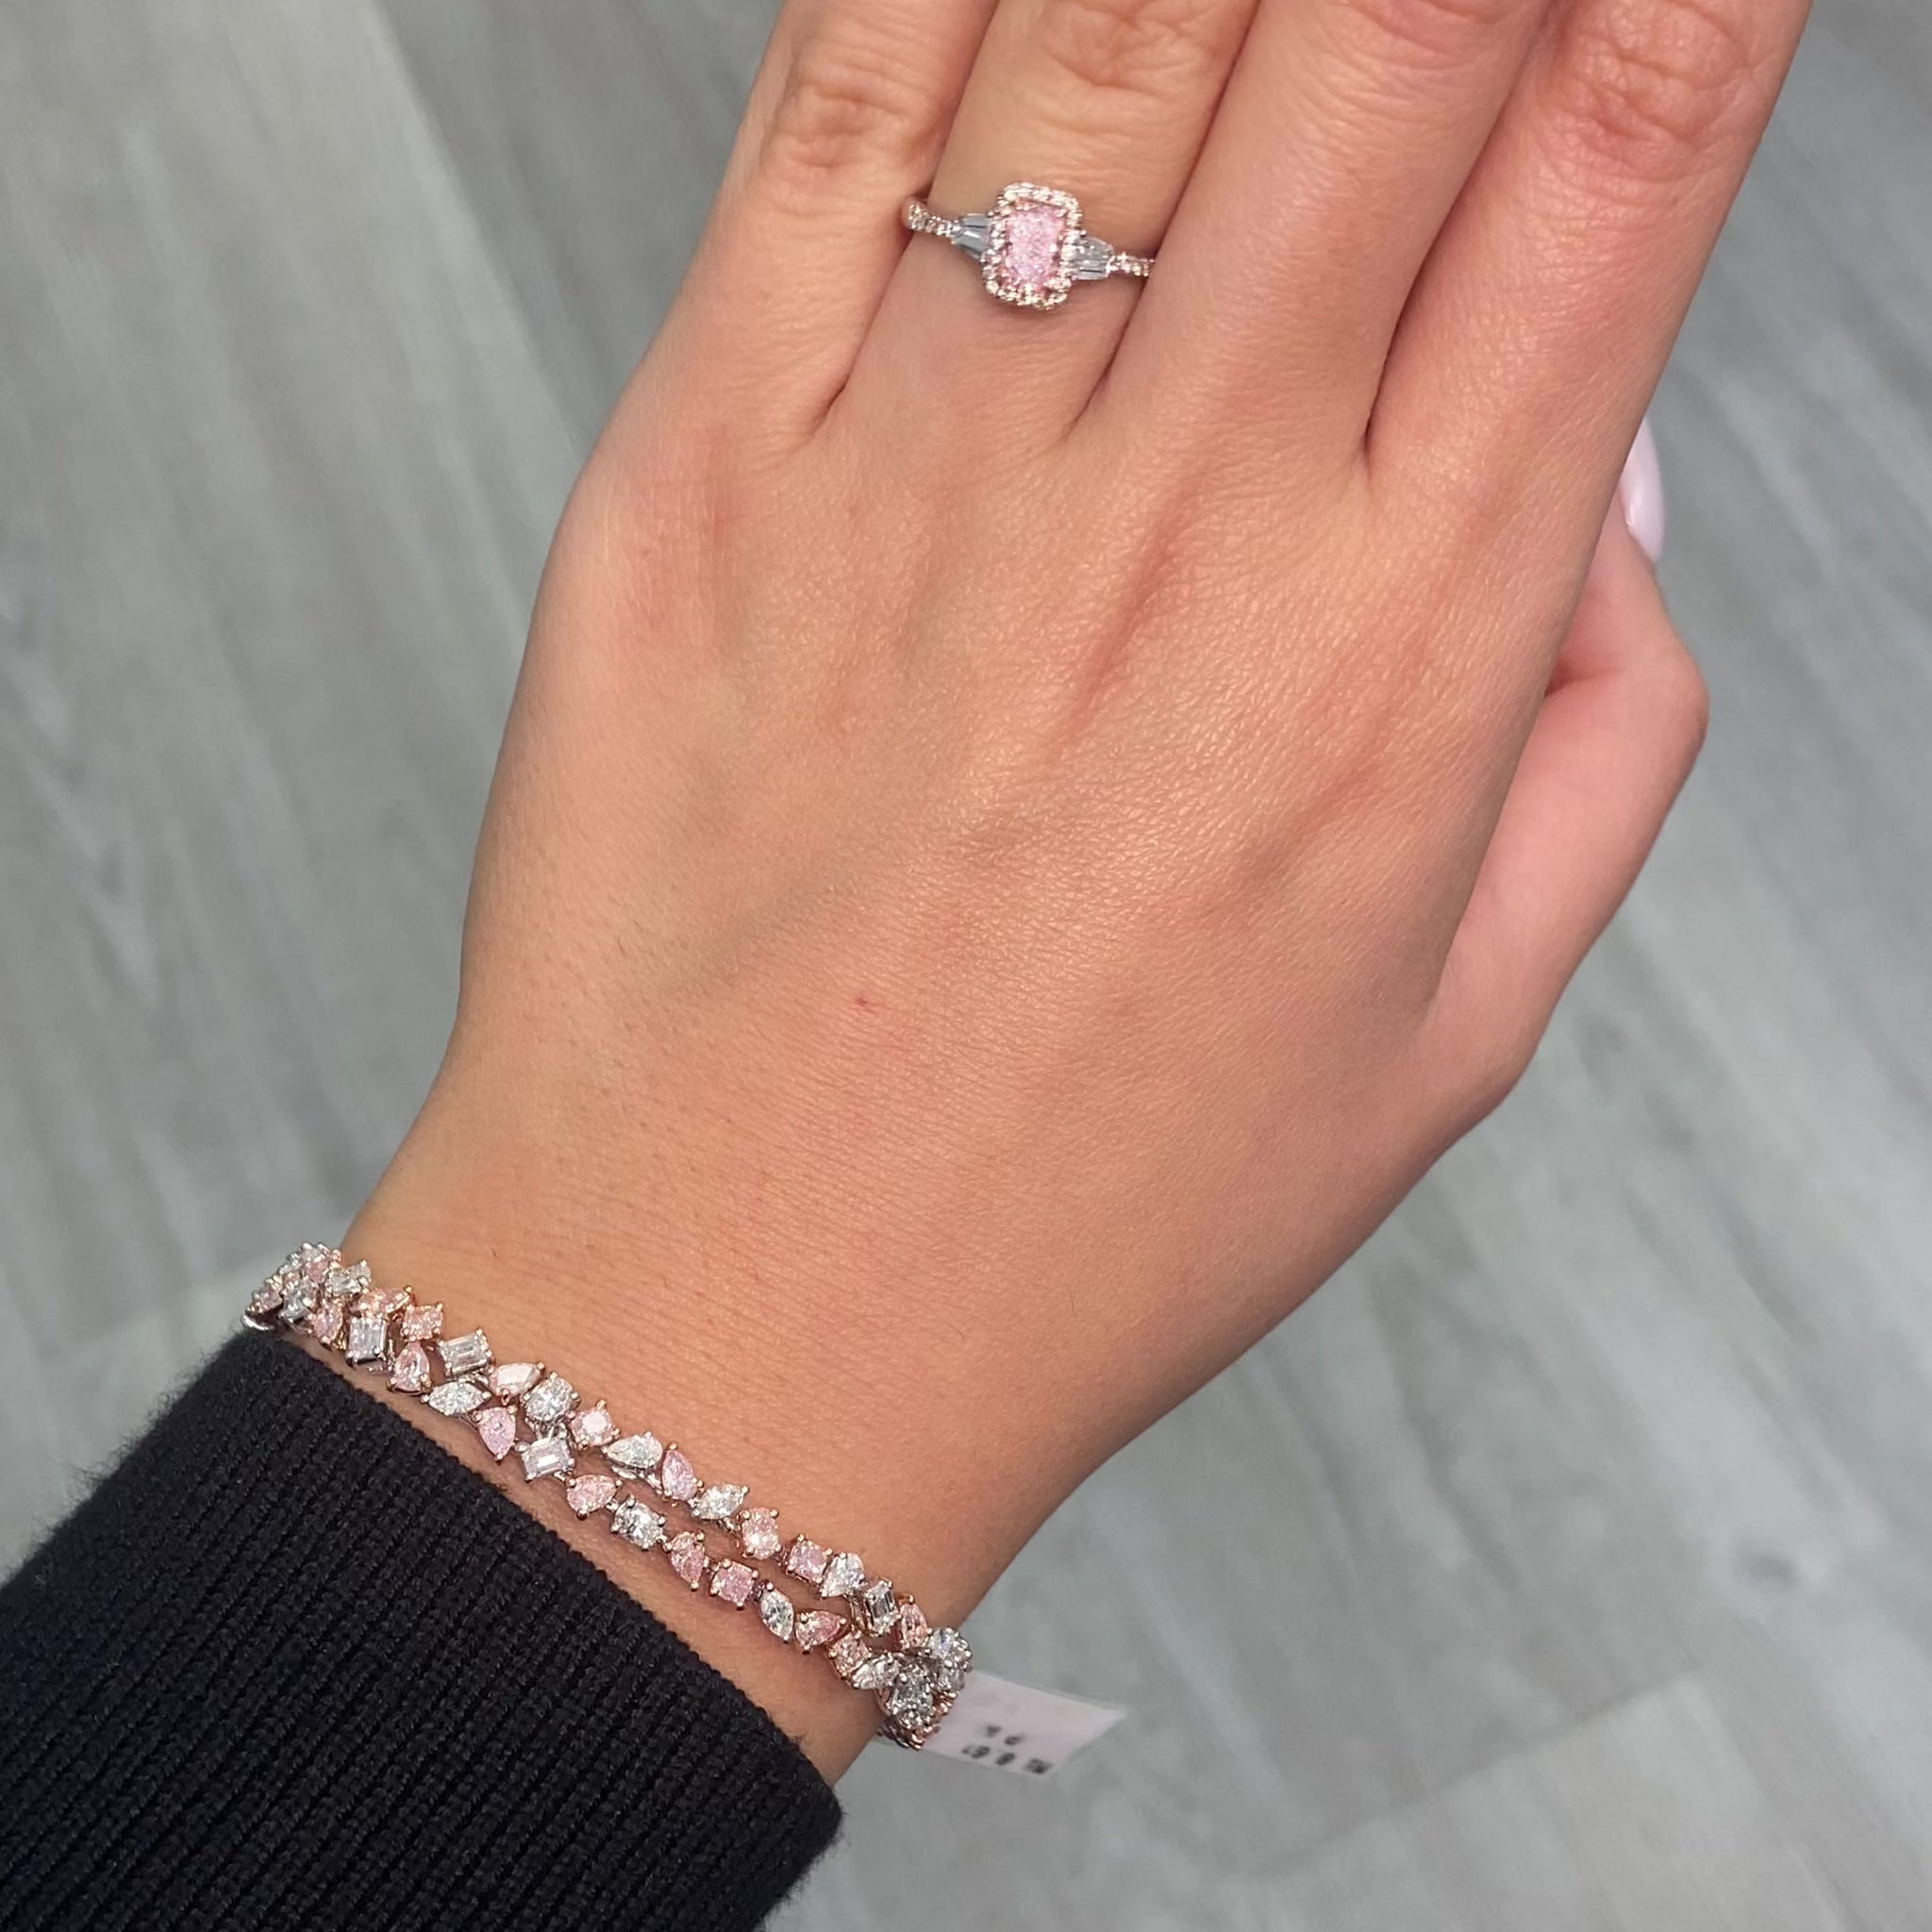 Pink diamond bracelet. pink diamond pear shape bracelet. Pink tennis bracelet. Natural pink diamond bracelet. Multi row pink diamond bracelet. Pink diamond jewelry